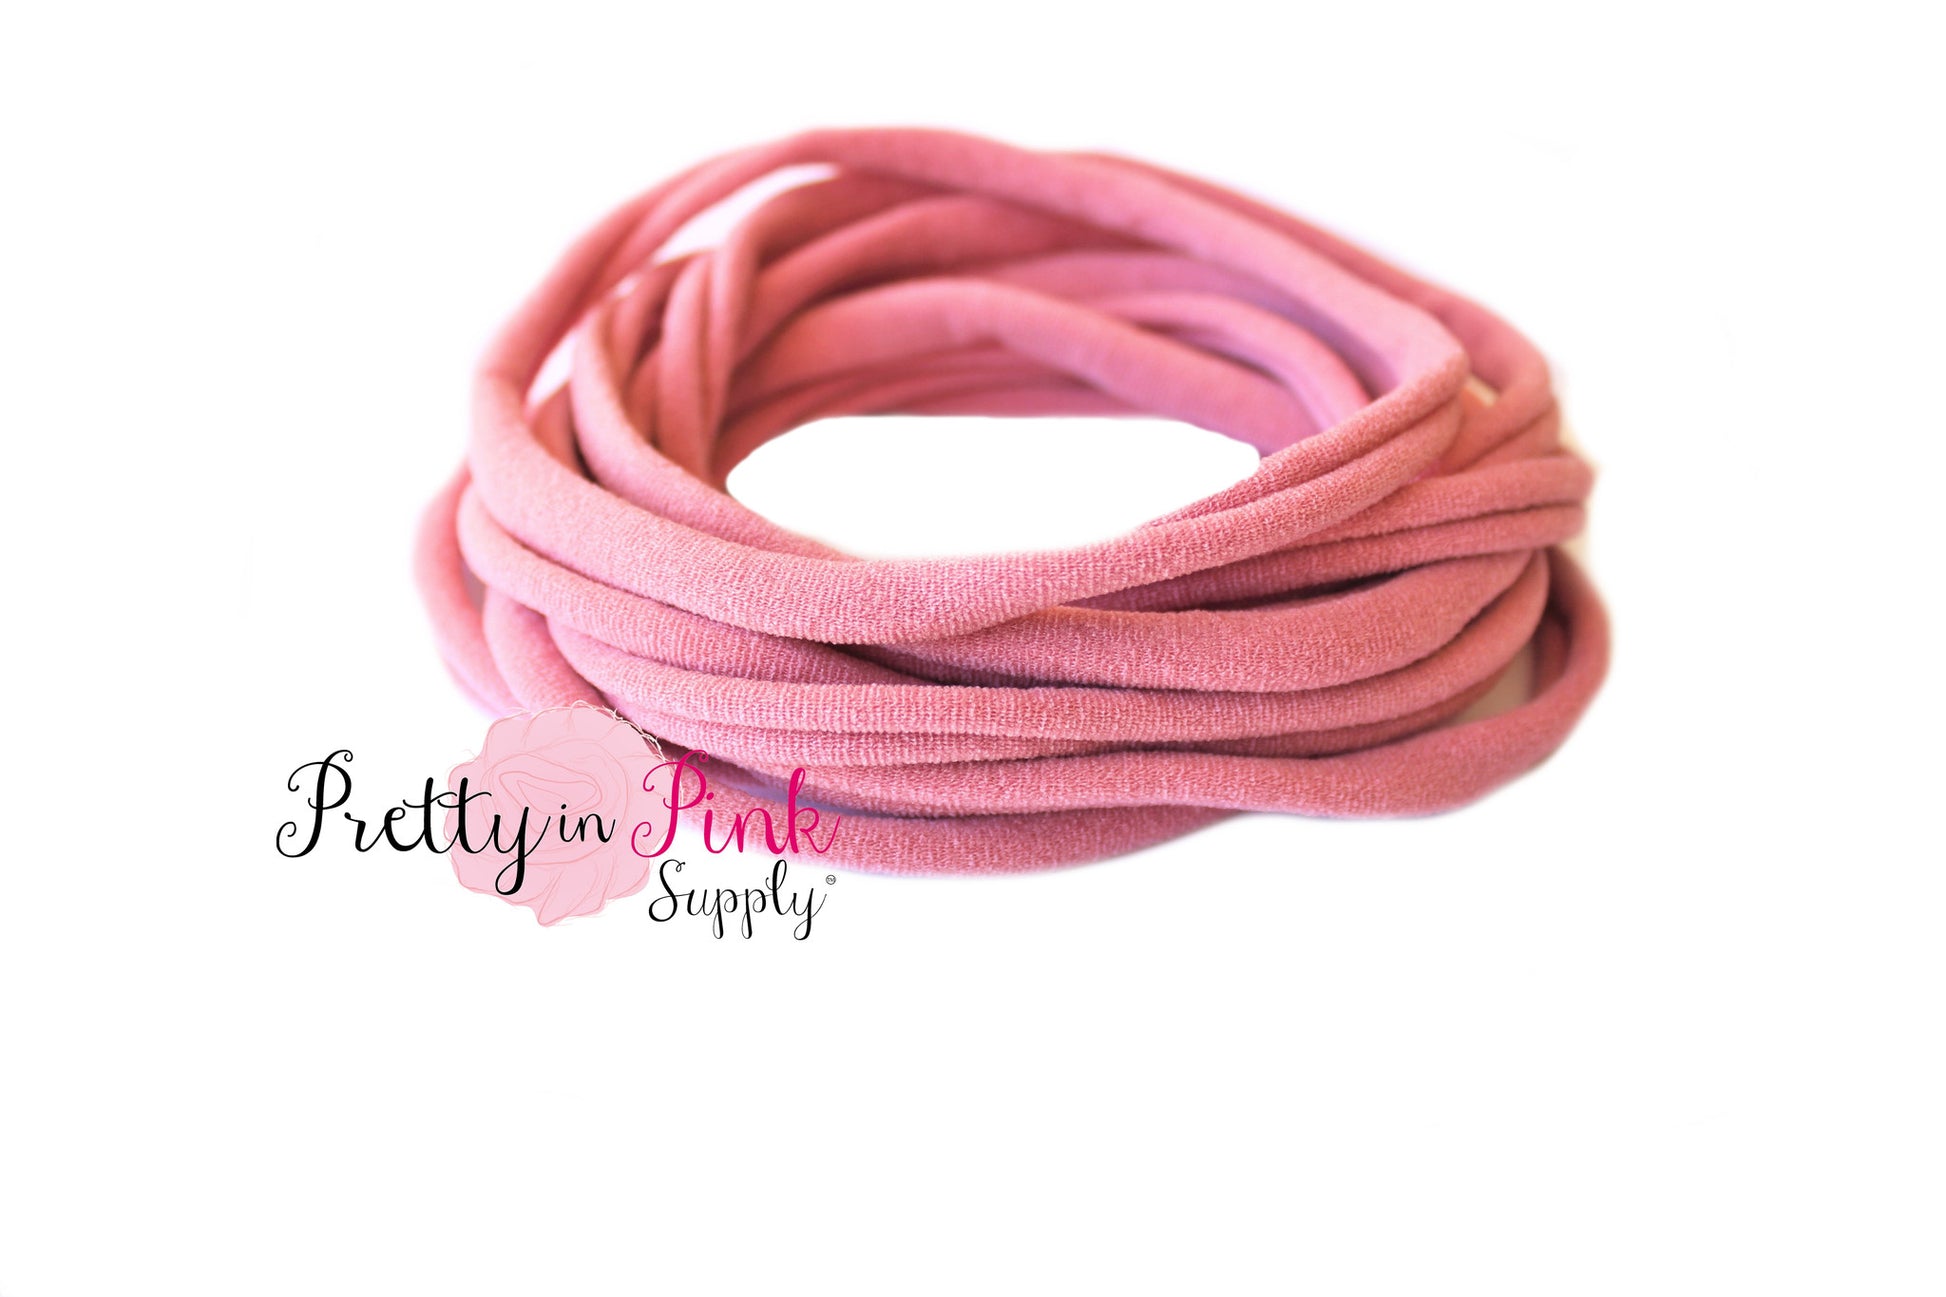 Dusty Rose THIN Nylon Headband - Pretty in Pink Supply